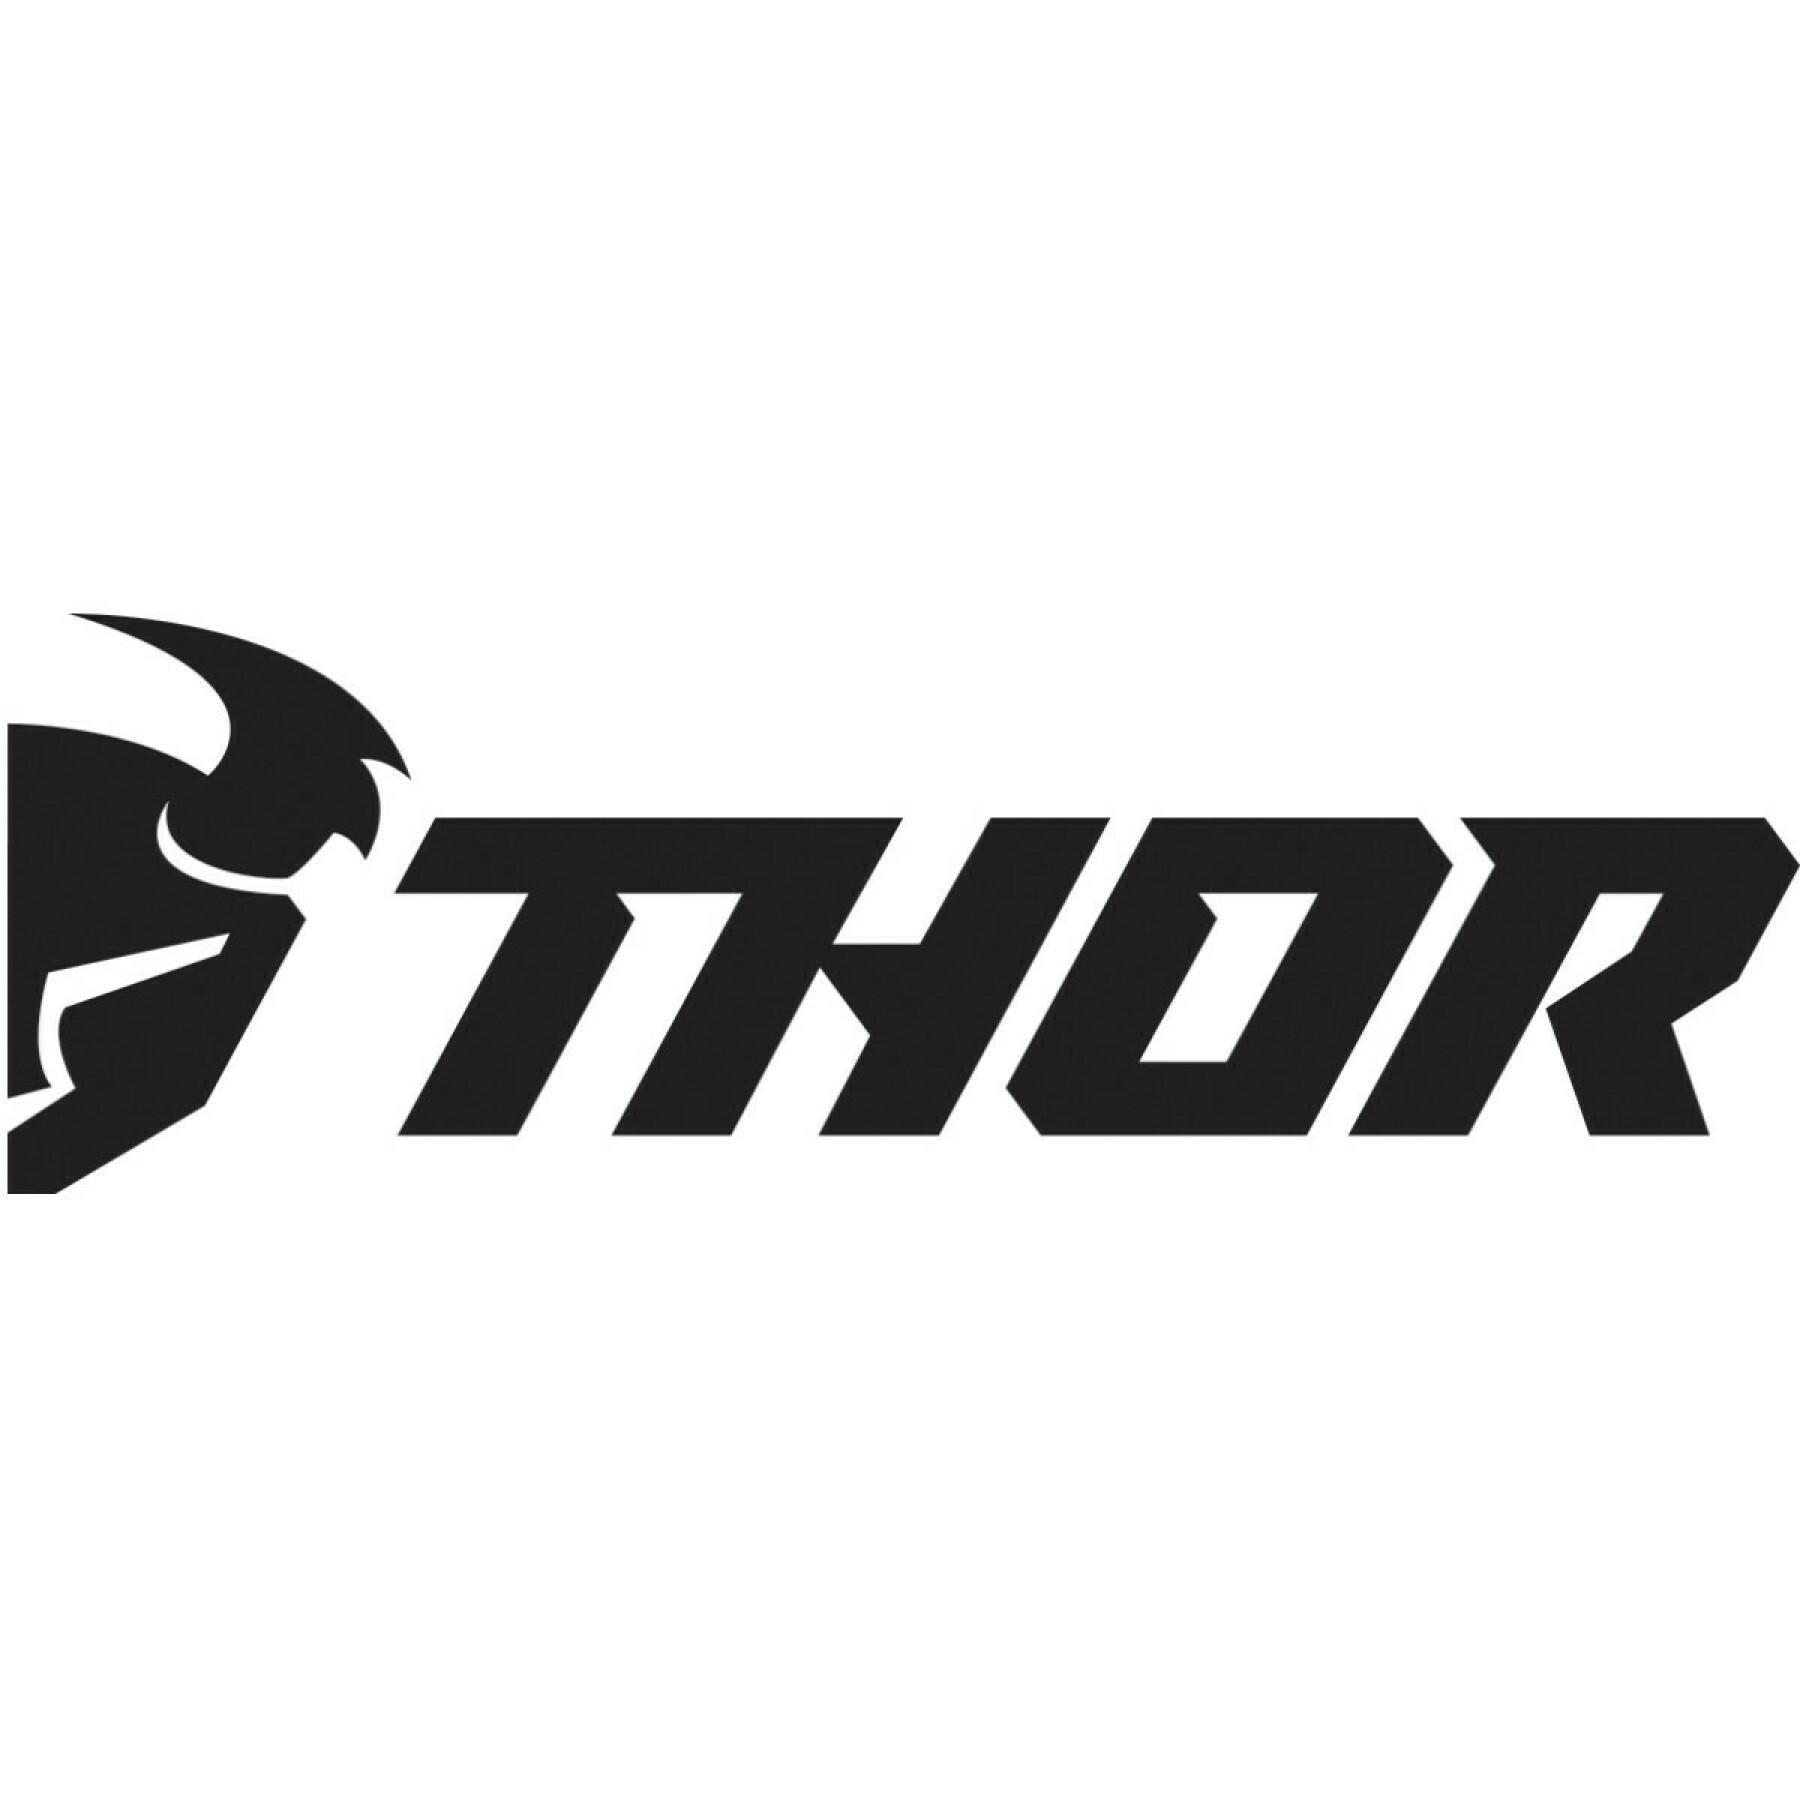 Set of 6 pre-cut stickers Thor 7,62 cm